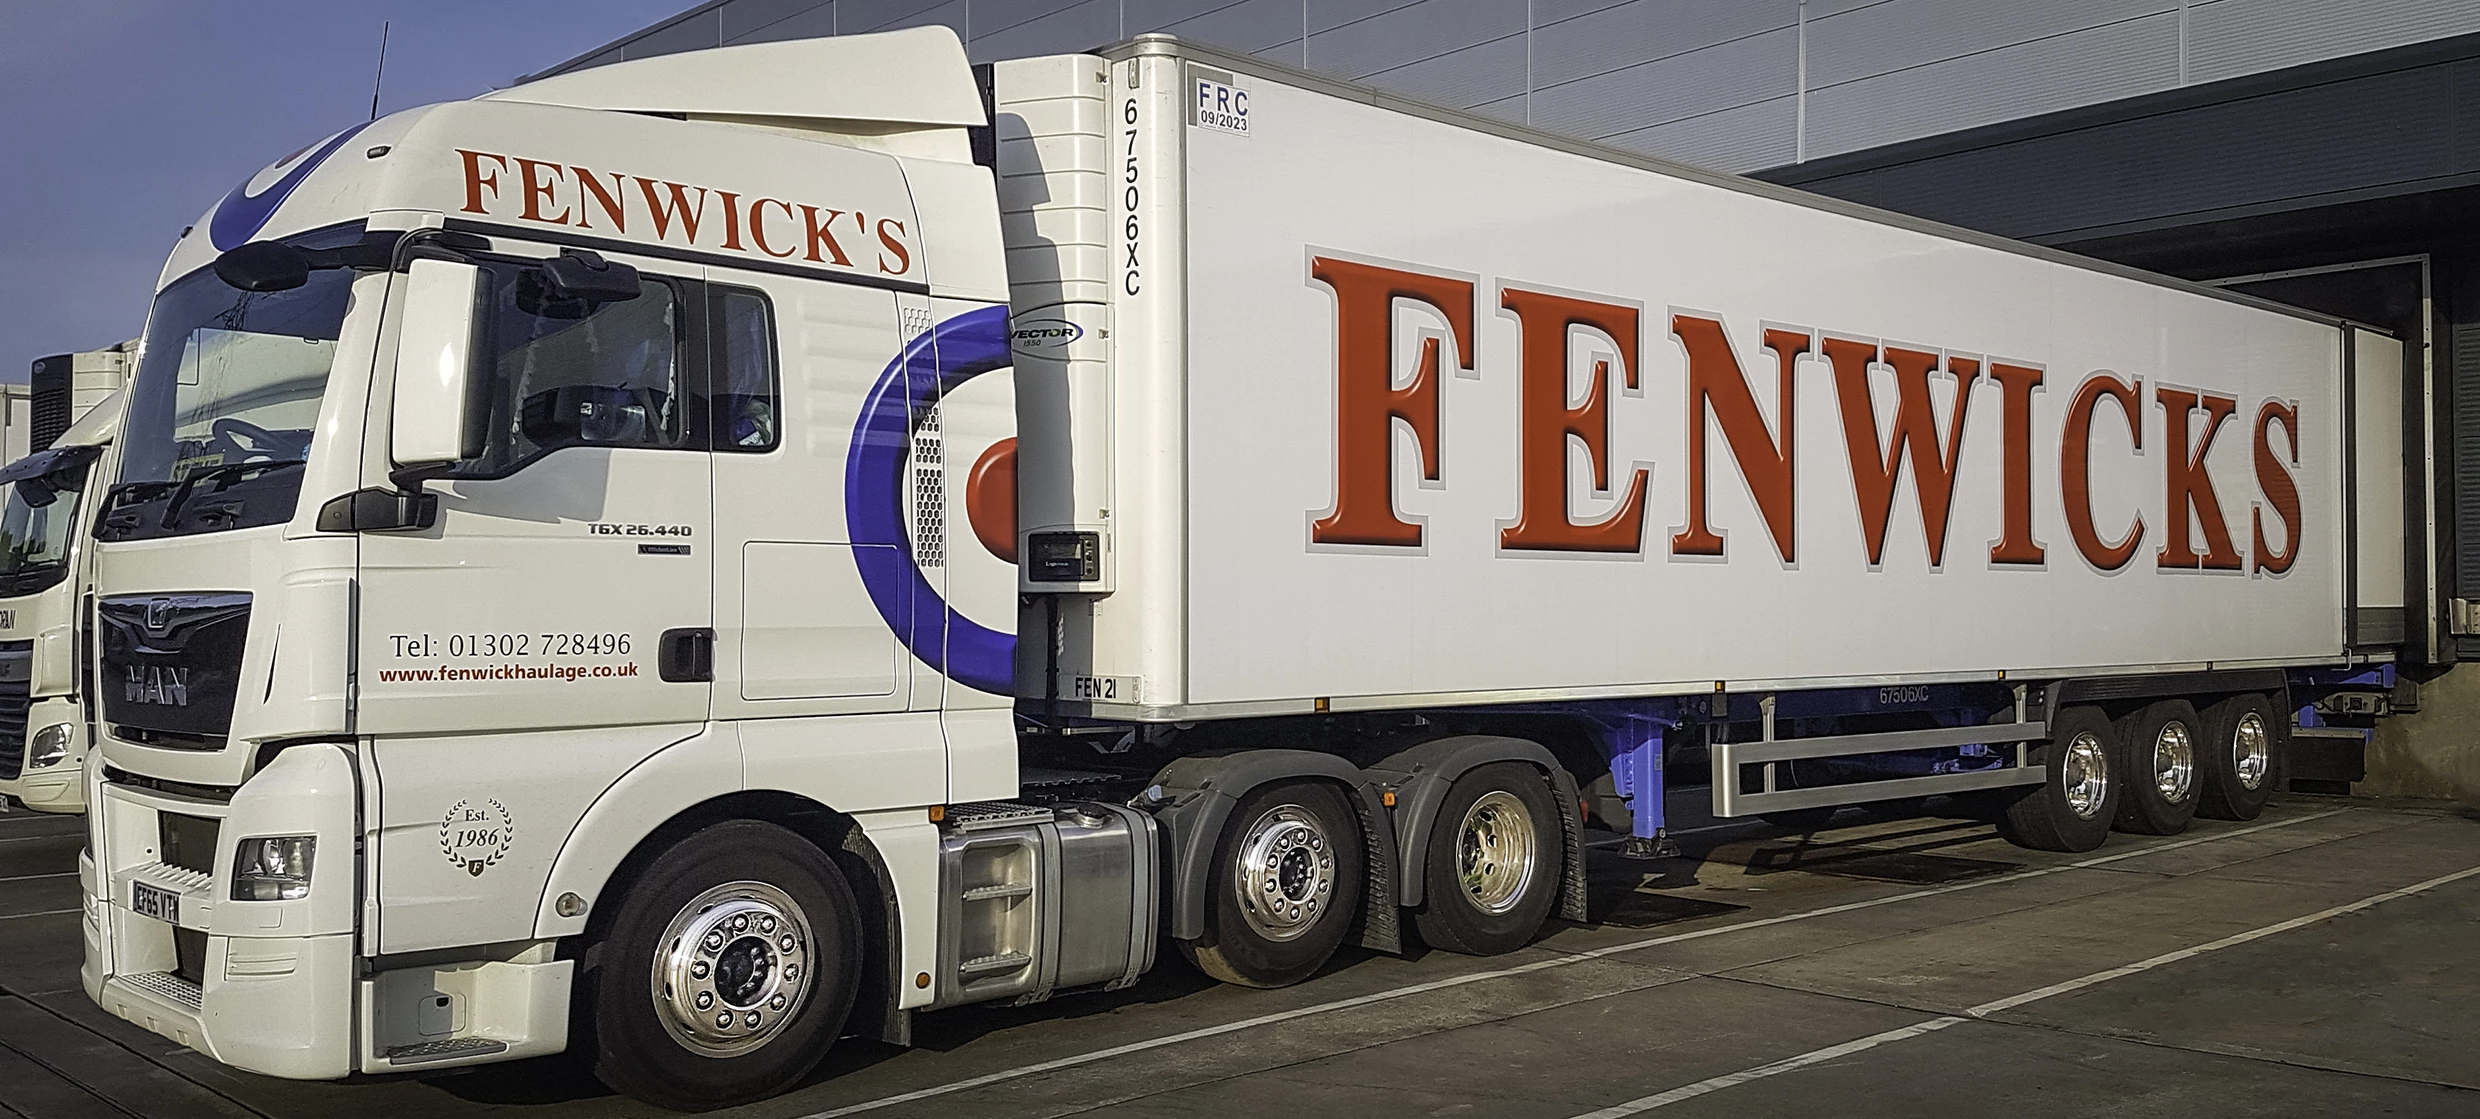 Fenwick's haulage